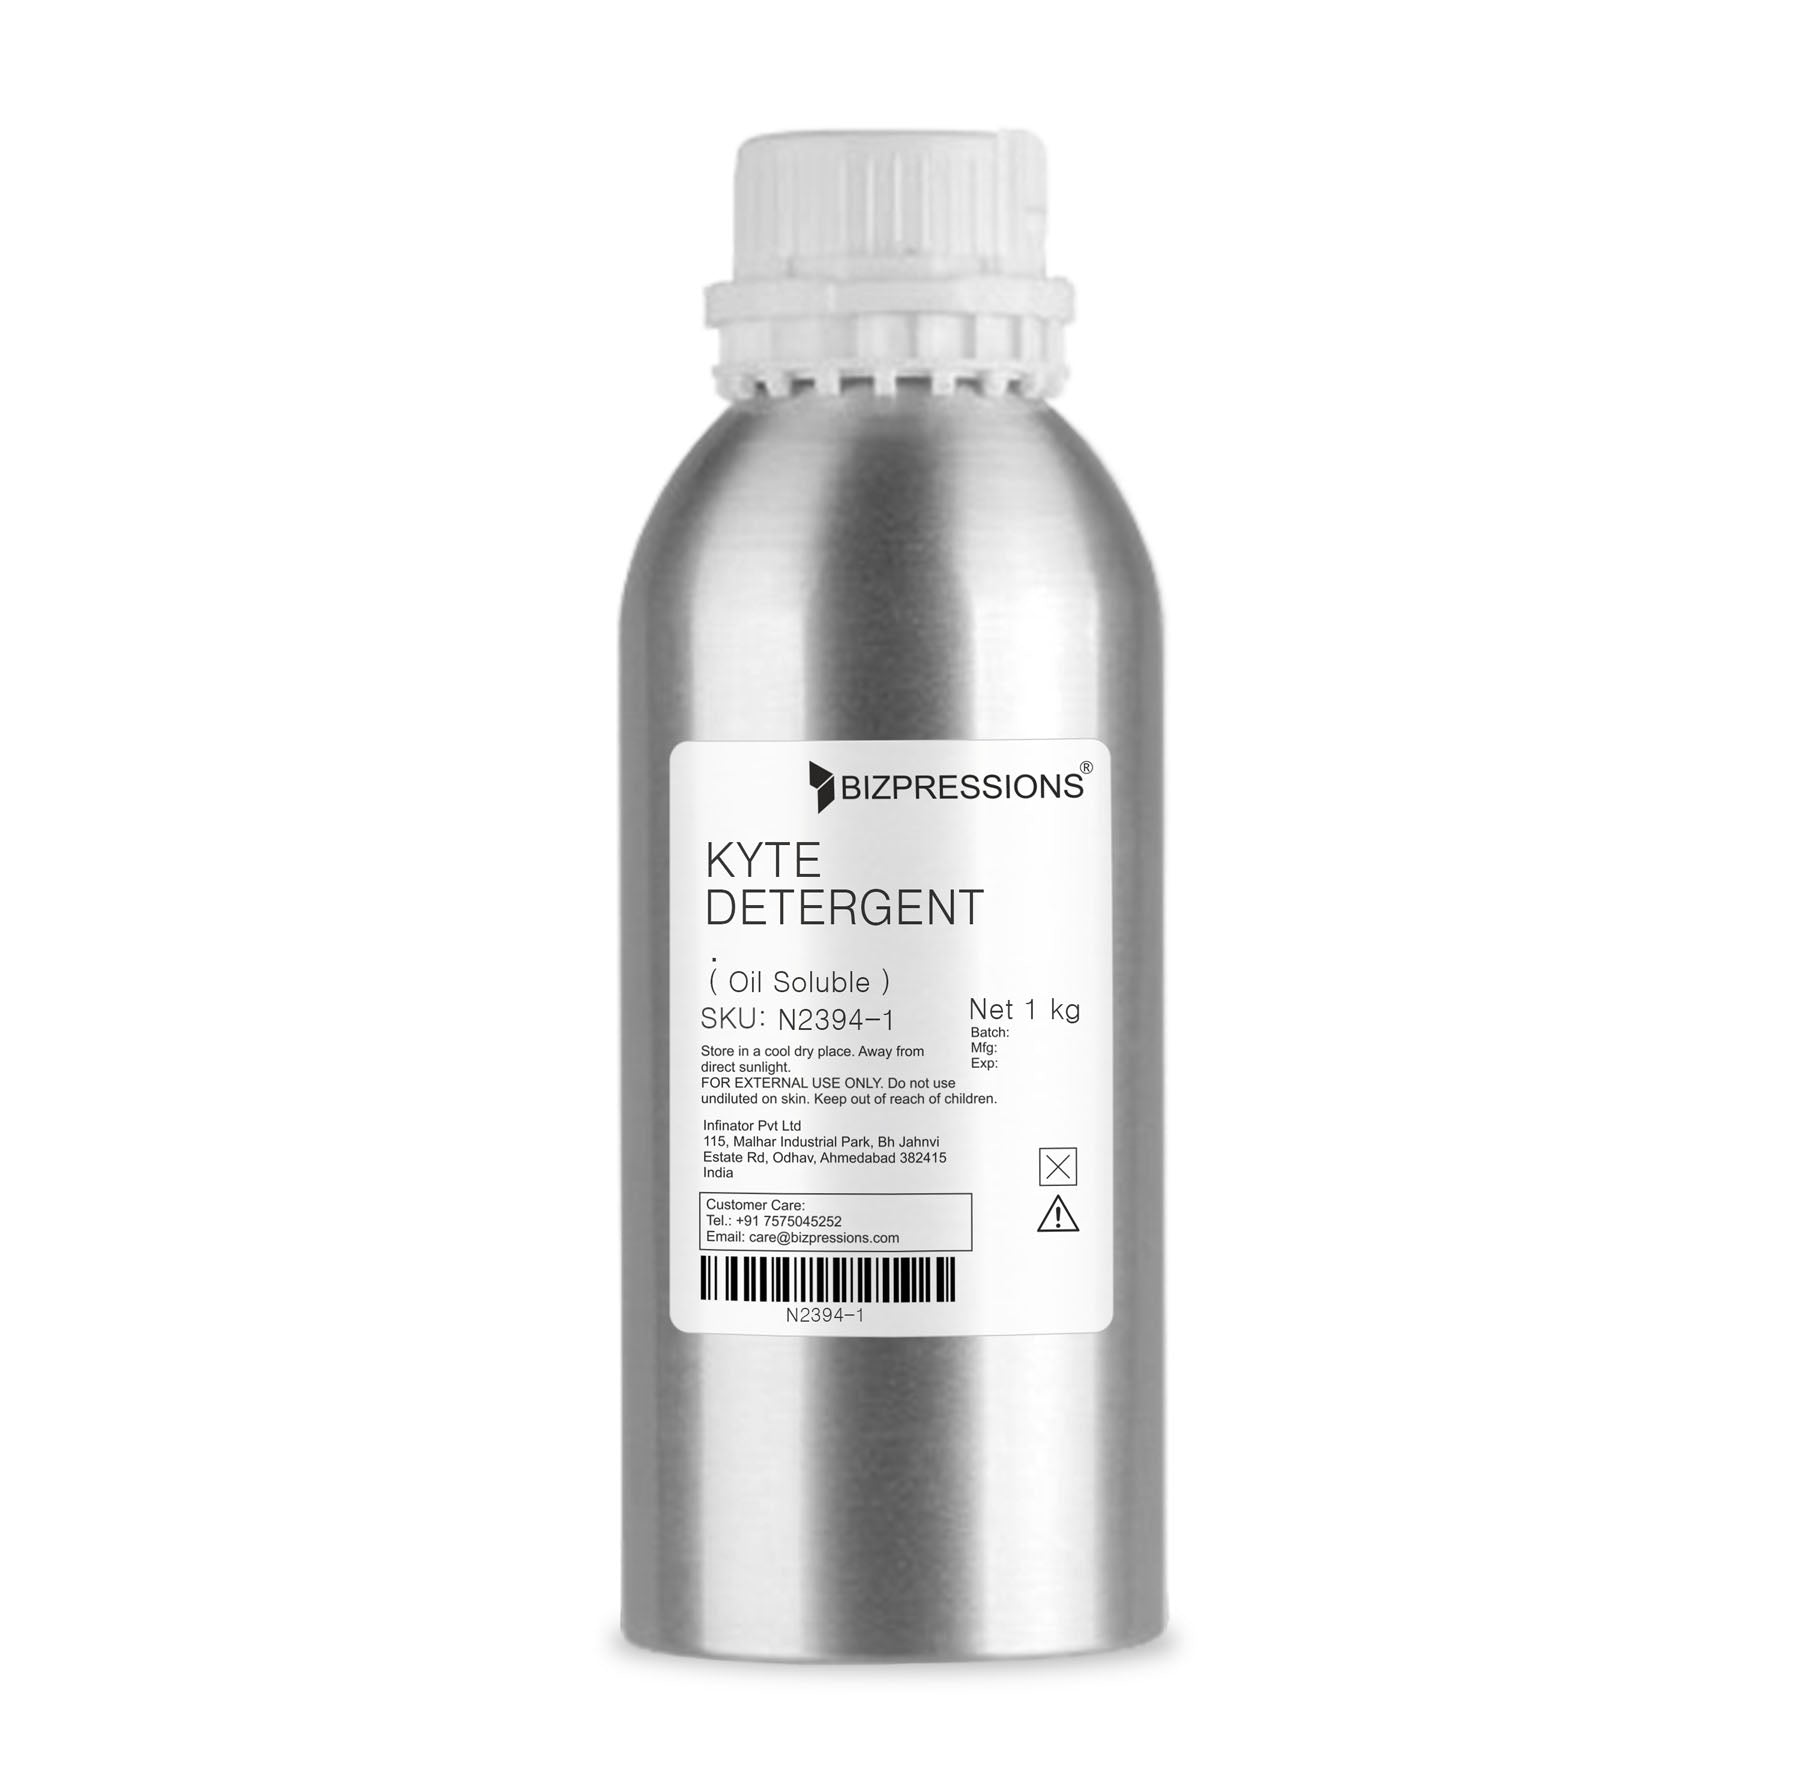 KYTE DETERGENT - Fragrance ( Oil Soluble ) - 1 kg